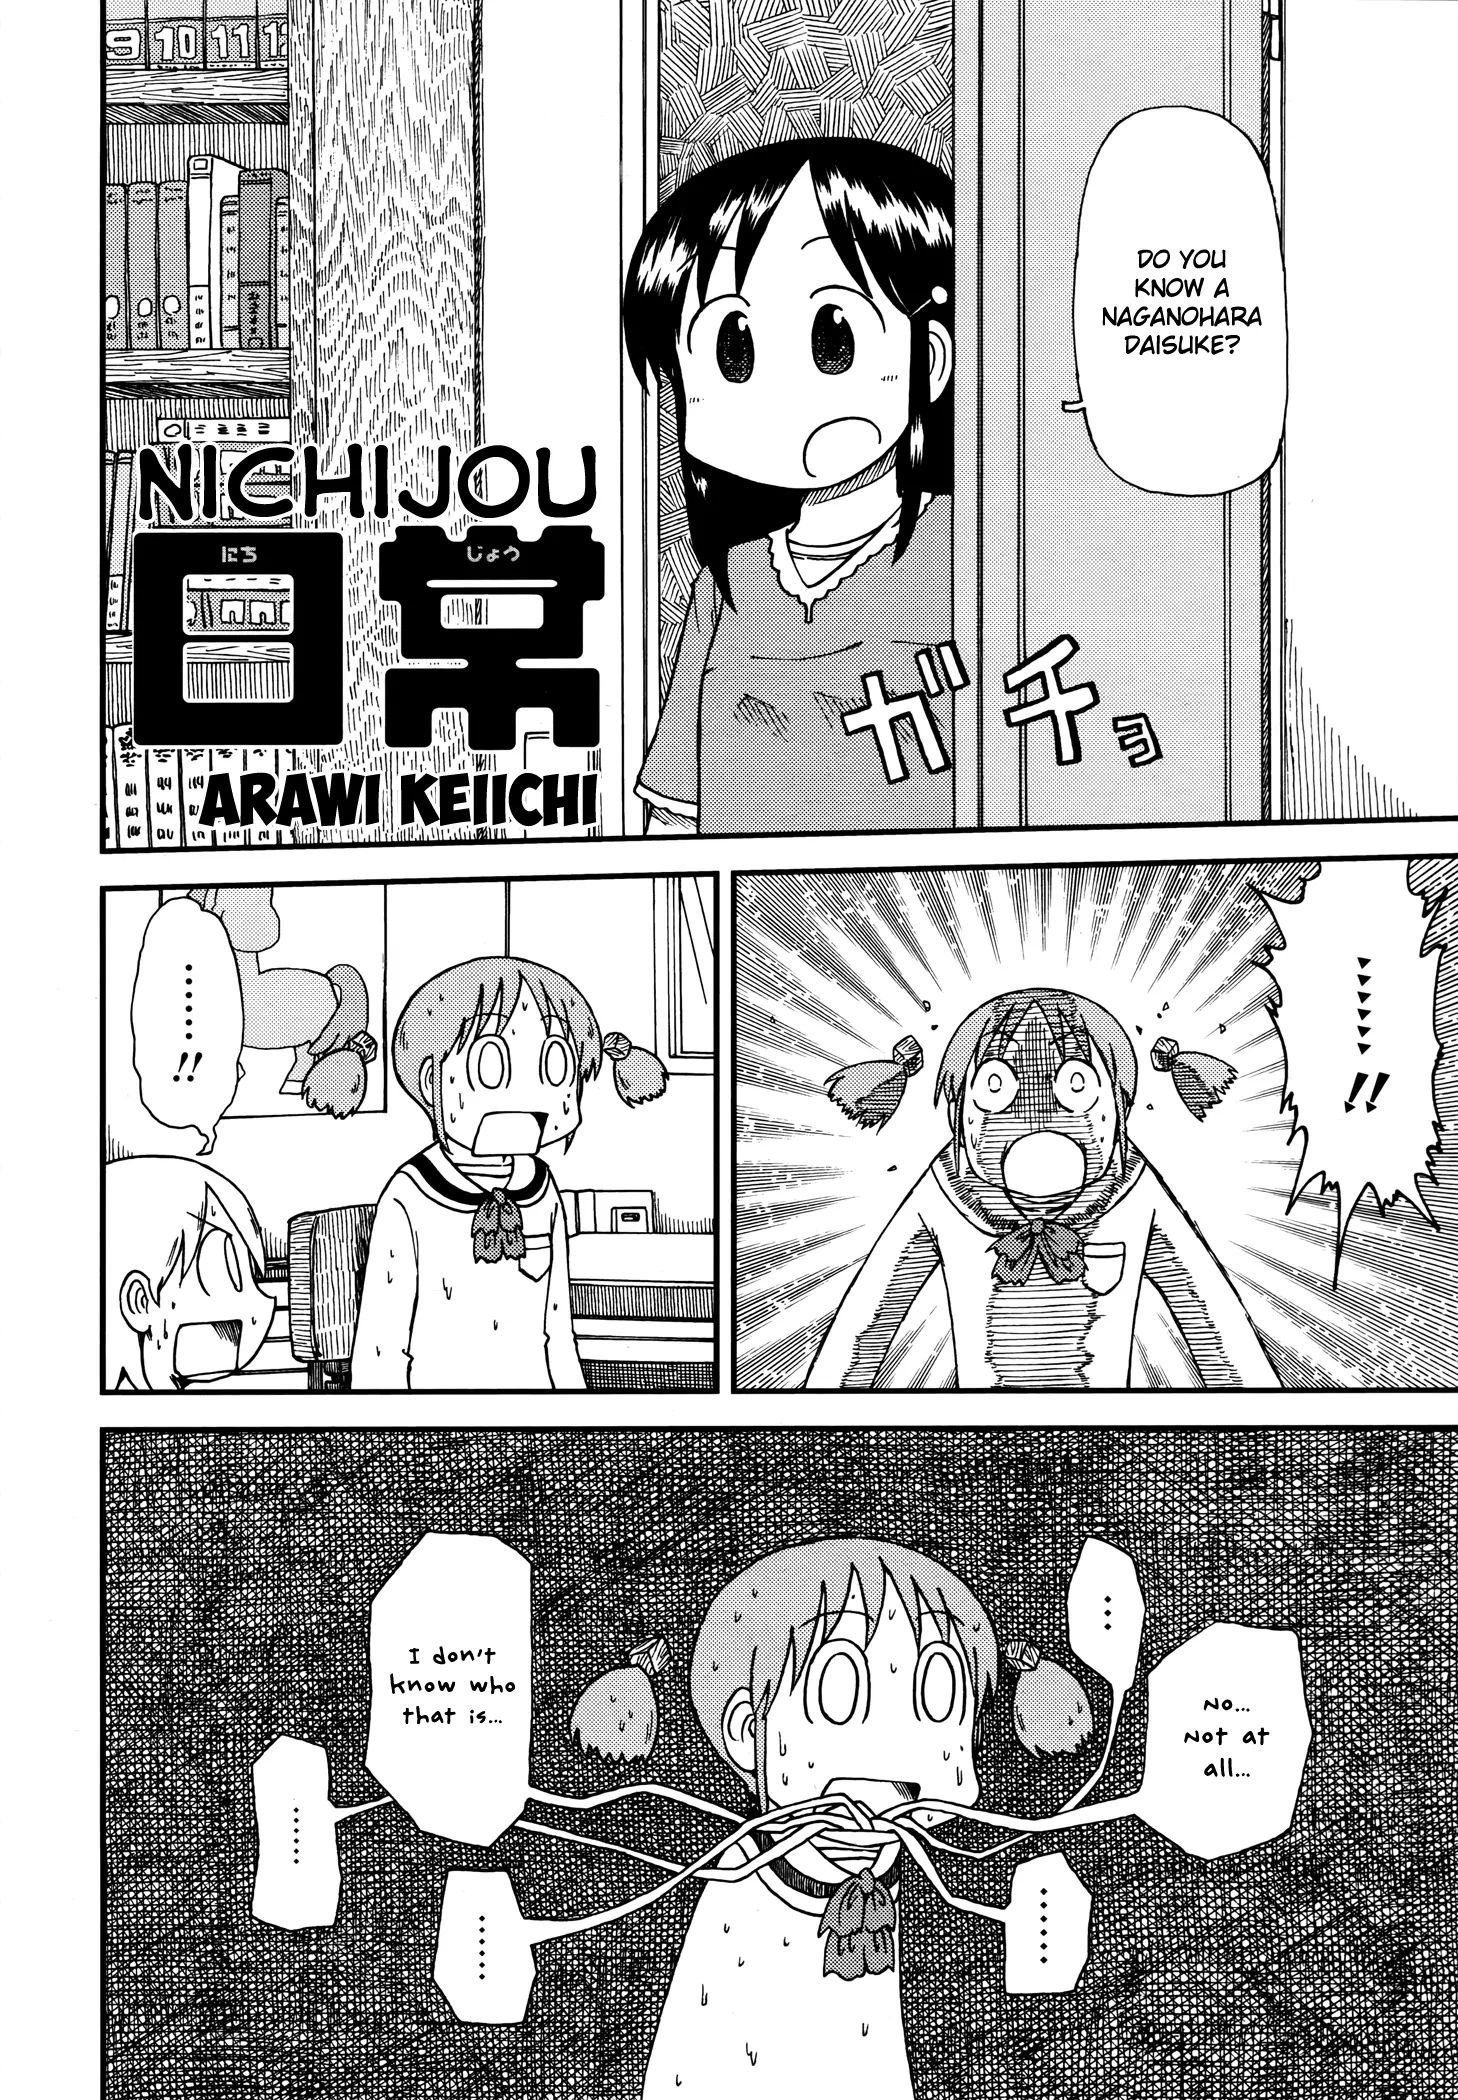 Nichijou - chapter 172.03 - #2